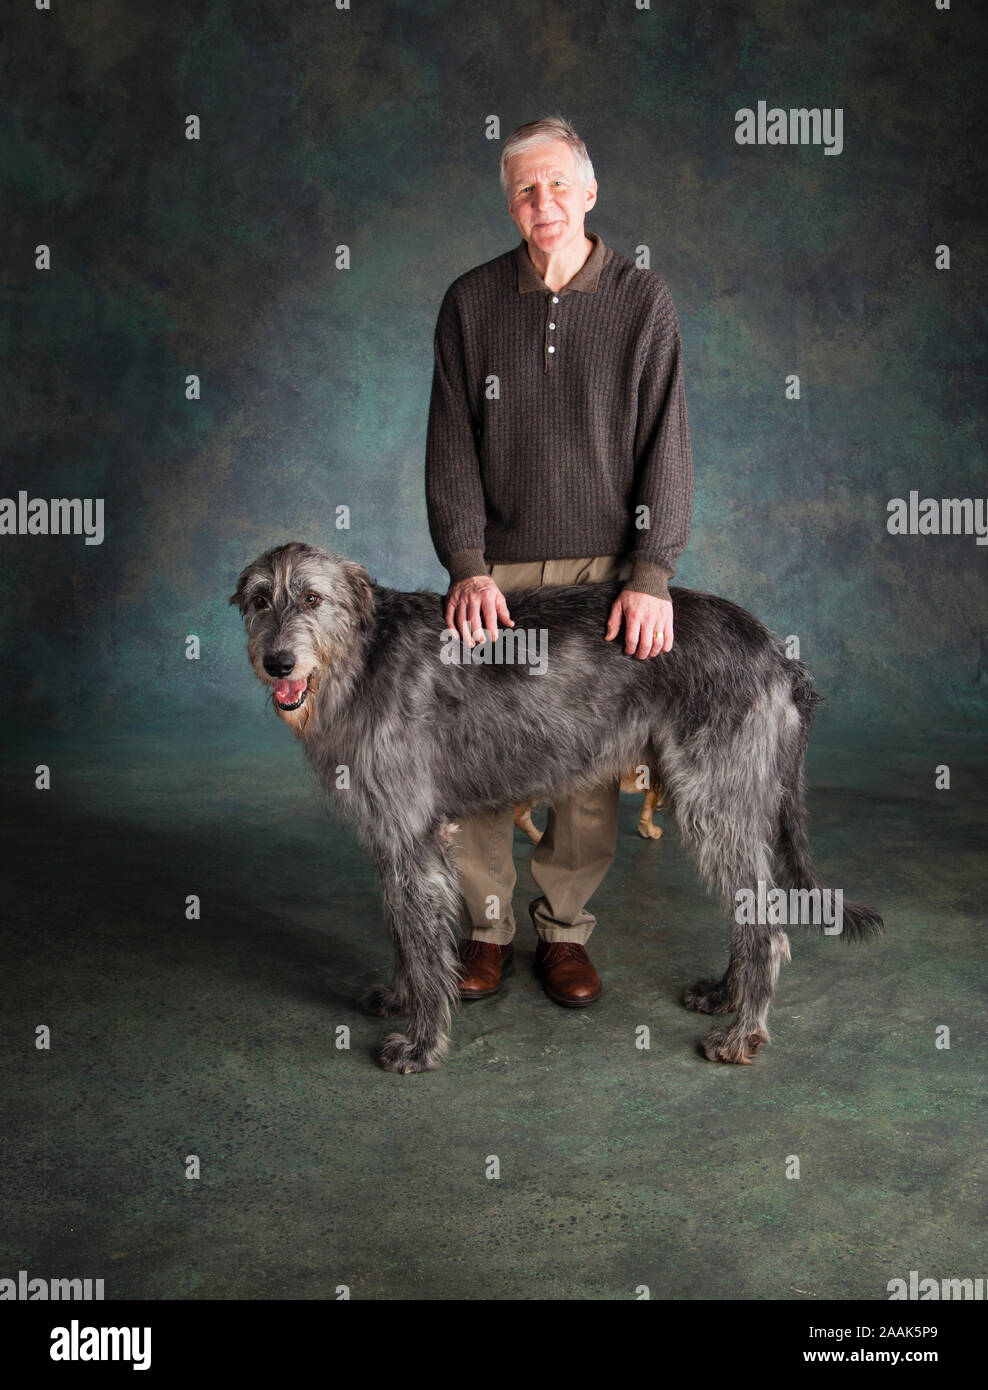 Studio portrait of senior man with Wolf hound dog Banque D'Images